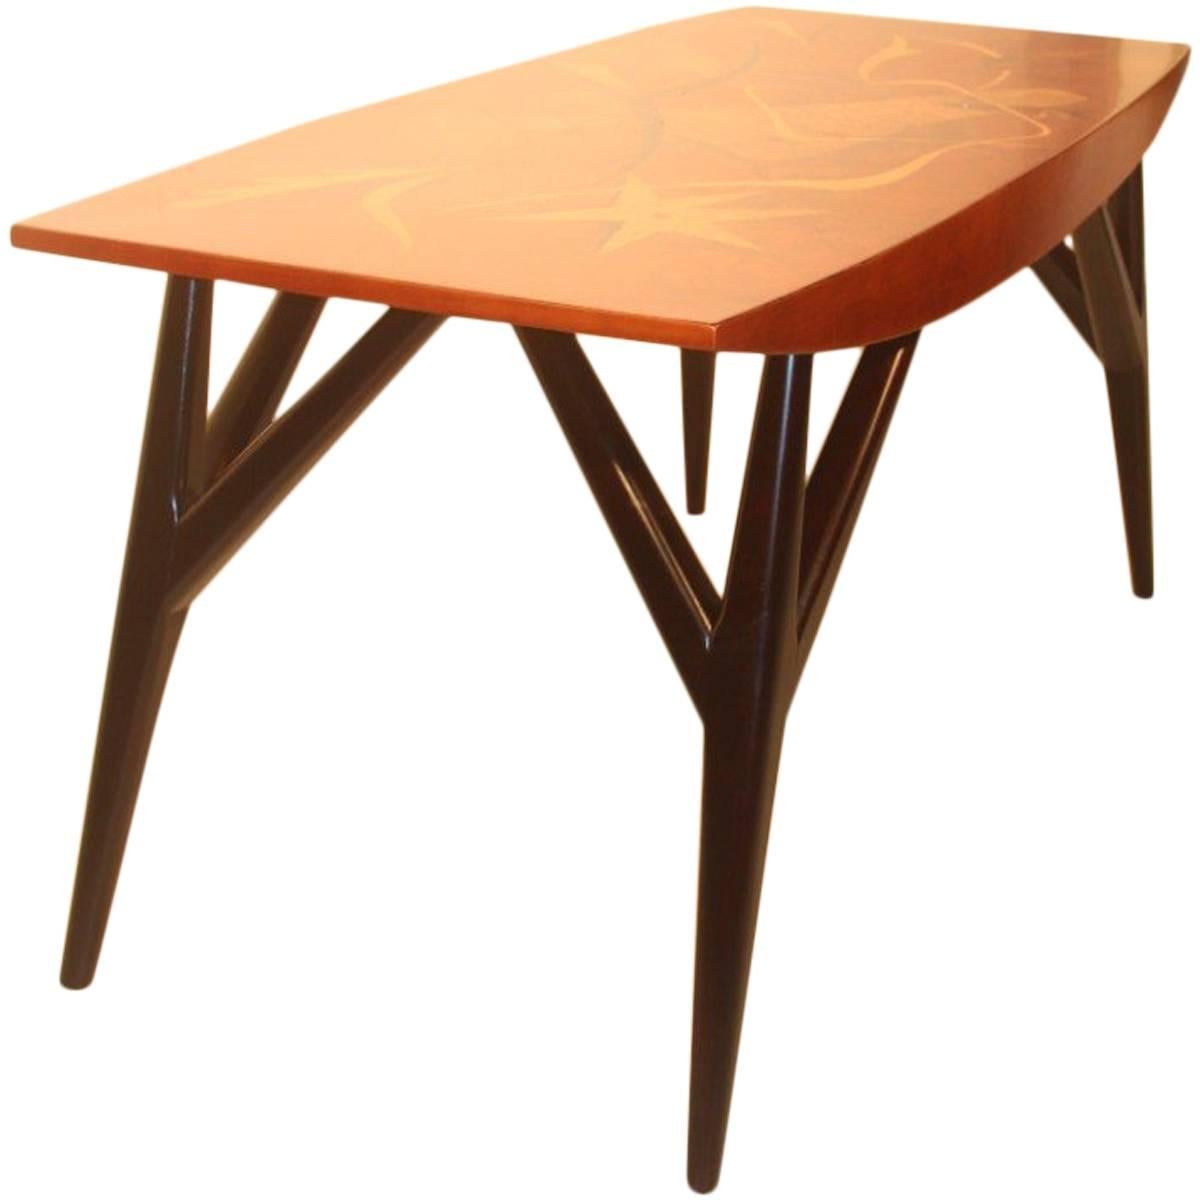 Coffee Table Luigi Scremin Minimalist Forms, 1940s Wood Precious Italian Design For Sale